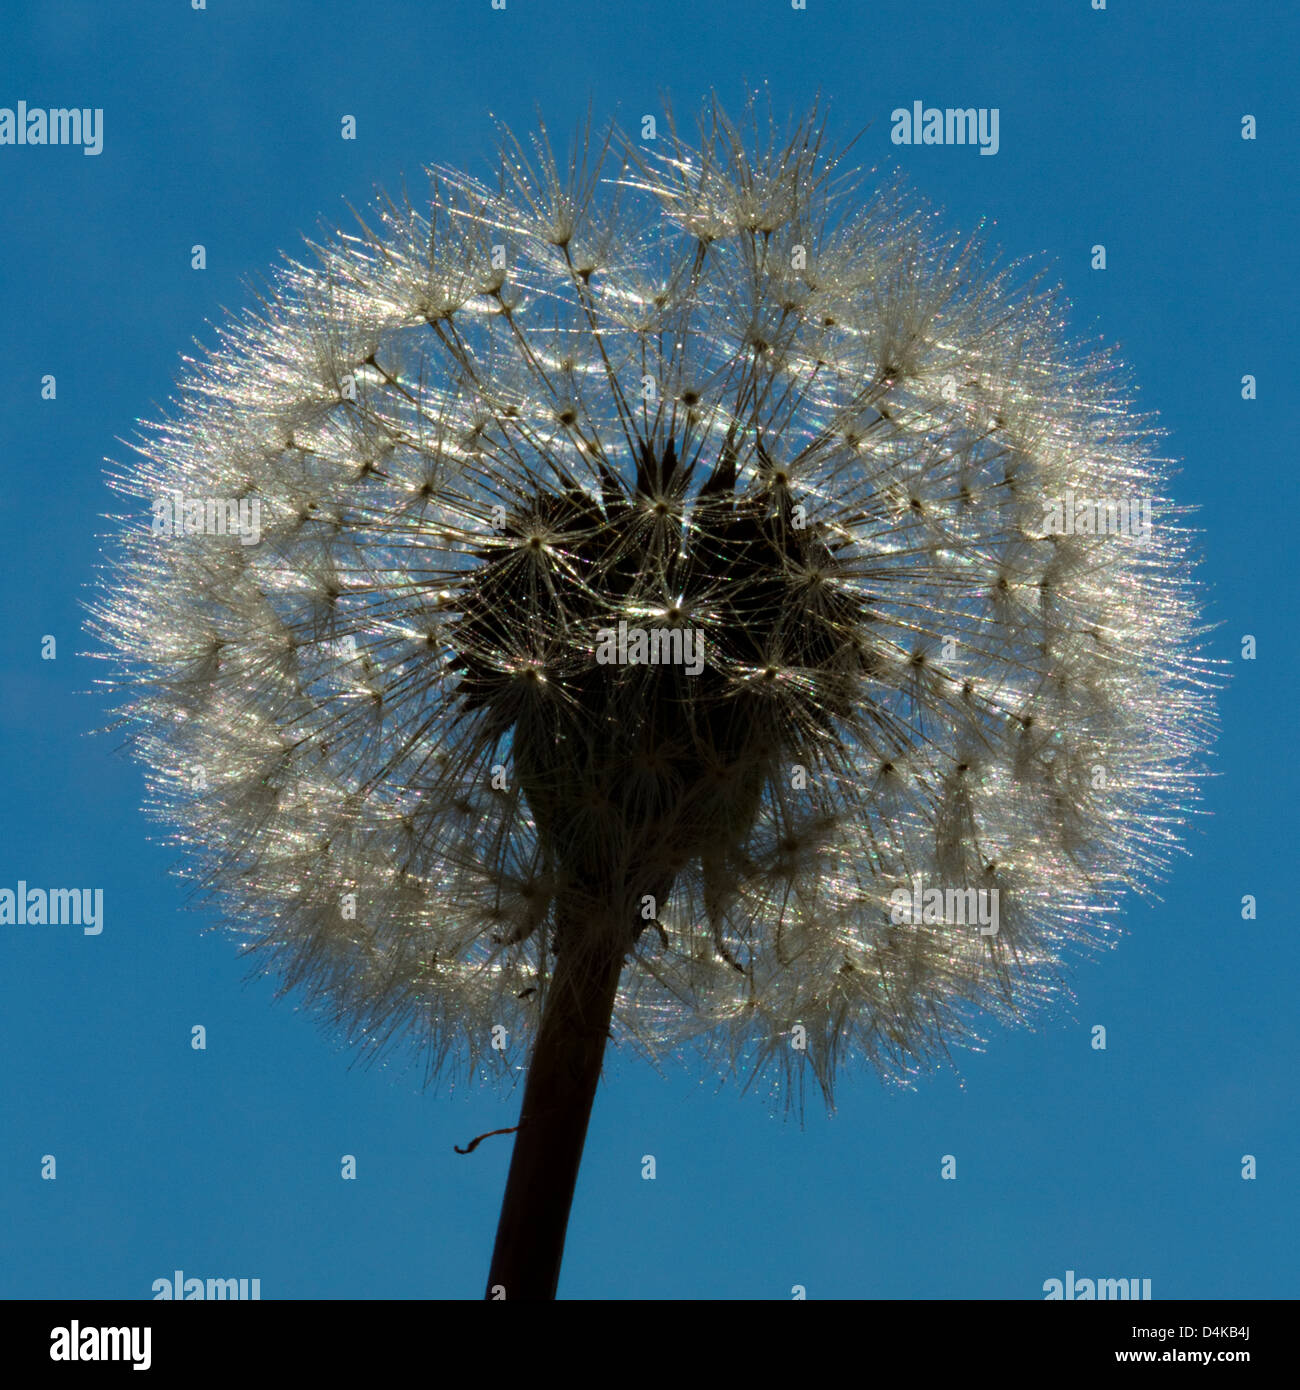 Dandelion seeds - Taraxacum erythrospermum, photographed facing up with a blue sky background Stock Photo